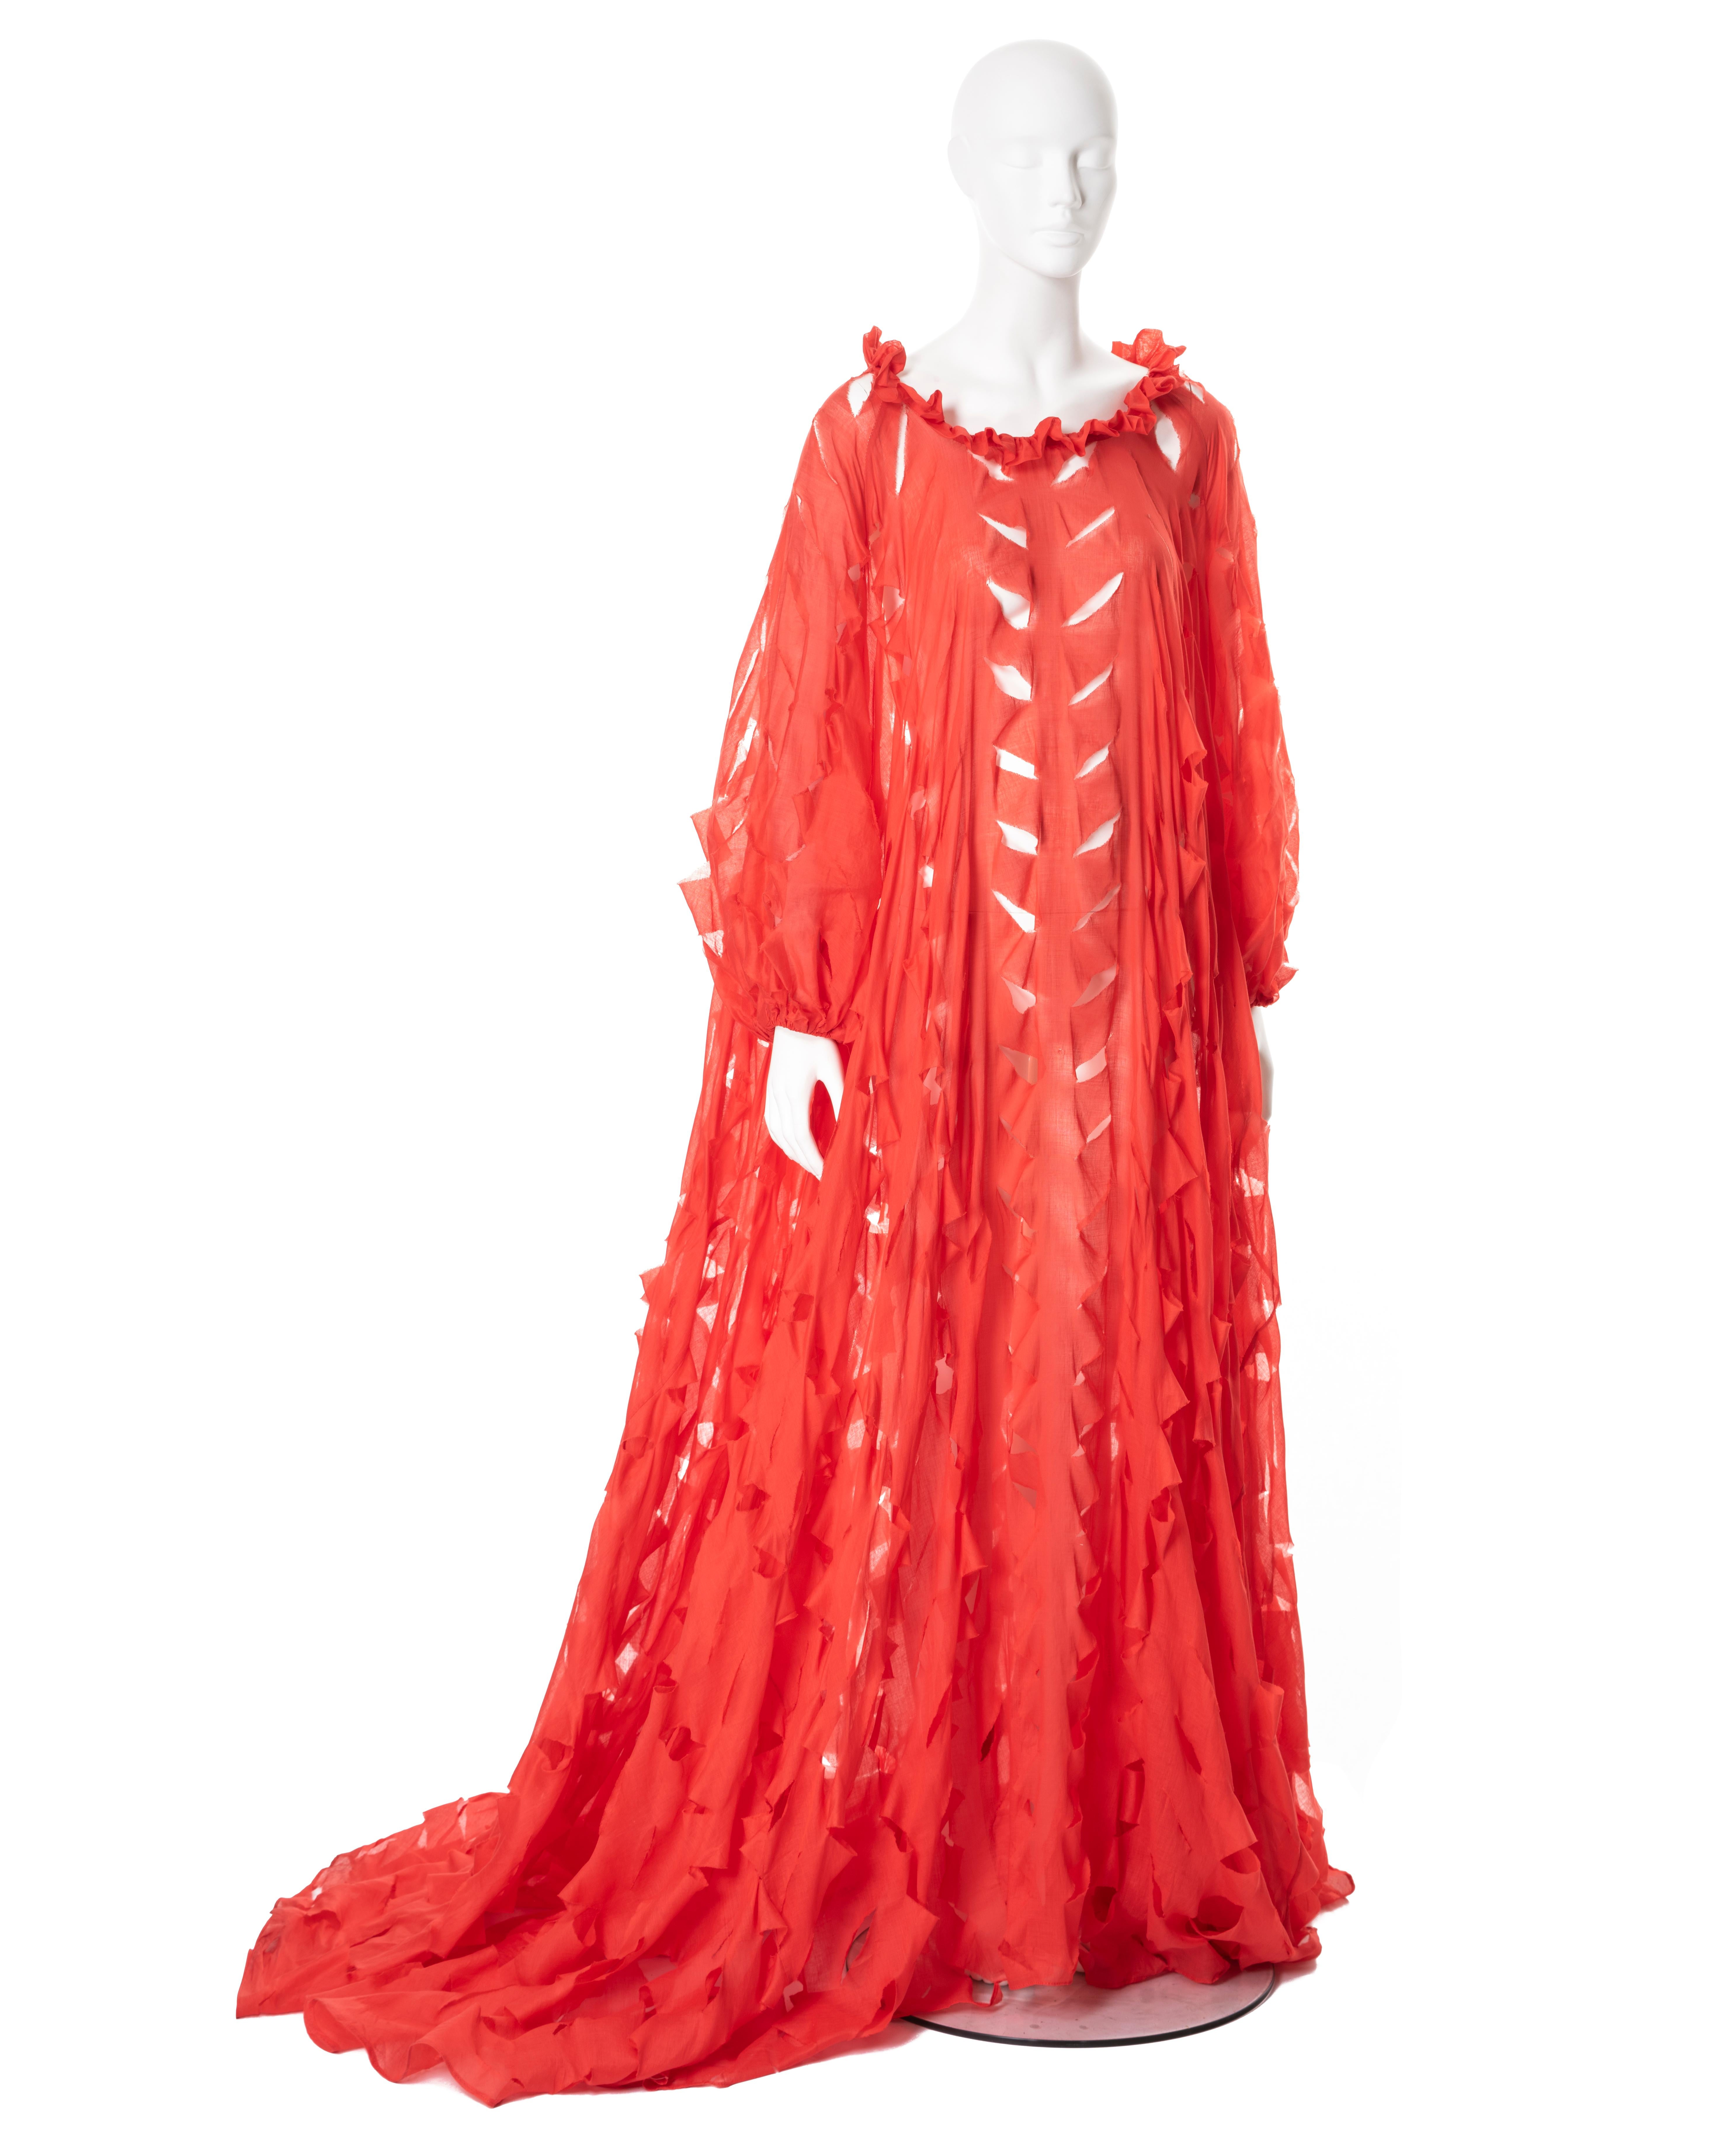 Vivienne Westwood hand-cut red cotton circle-cut dress, ss 1991 For Sale 1